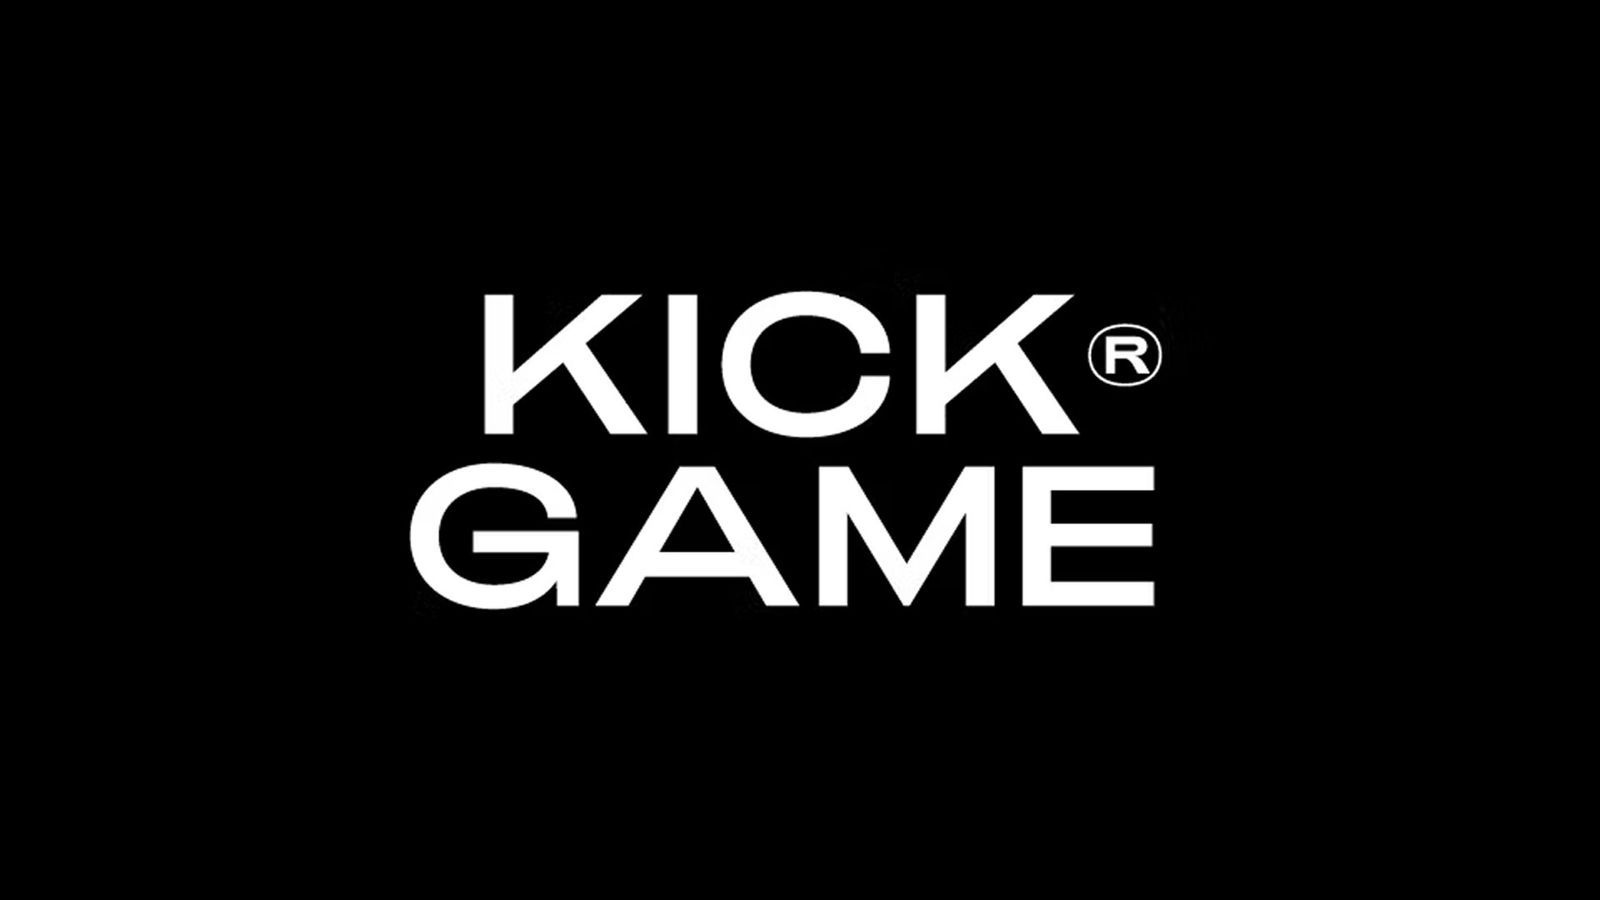 The Kick Game logo in white.